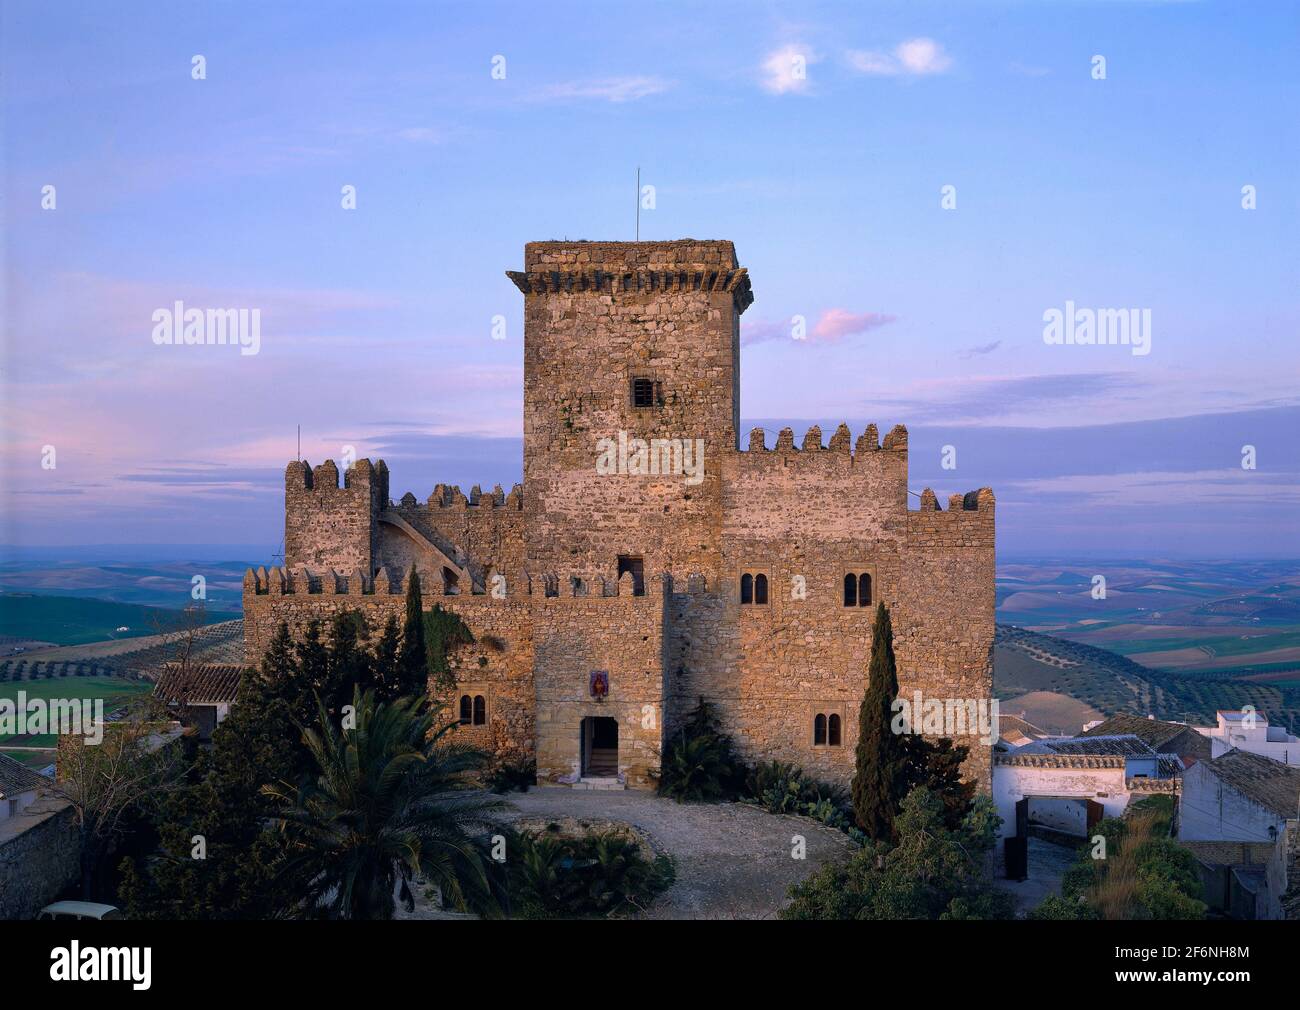 CASTILLO DE ORIGEN ARABE - SIGLO XIV. Location: CASTILLO. ESPEJO. CORDOBA. SPAIN. Stock Photo